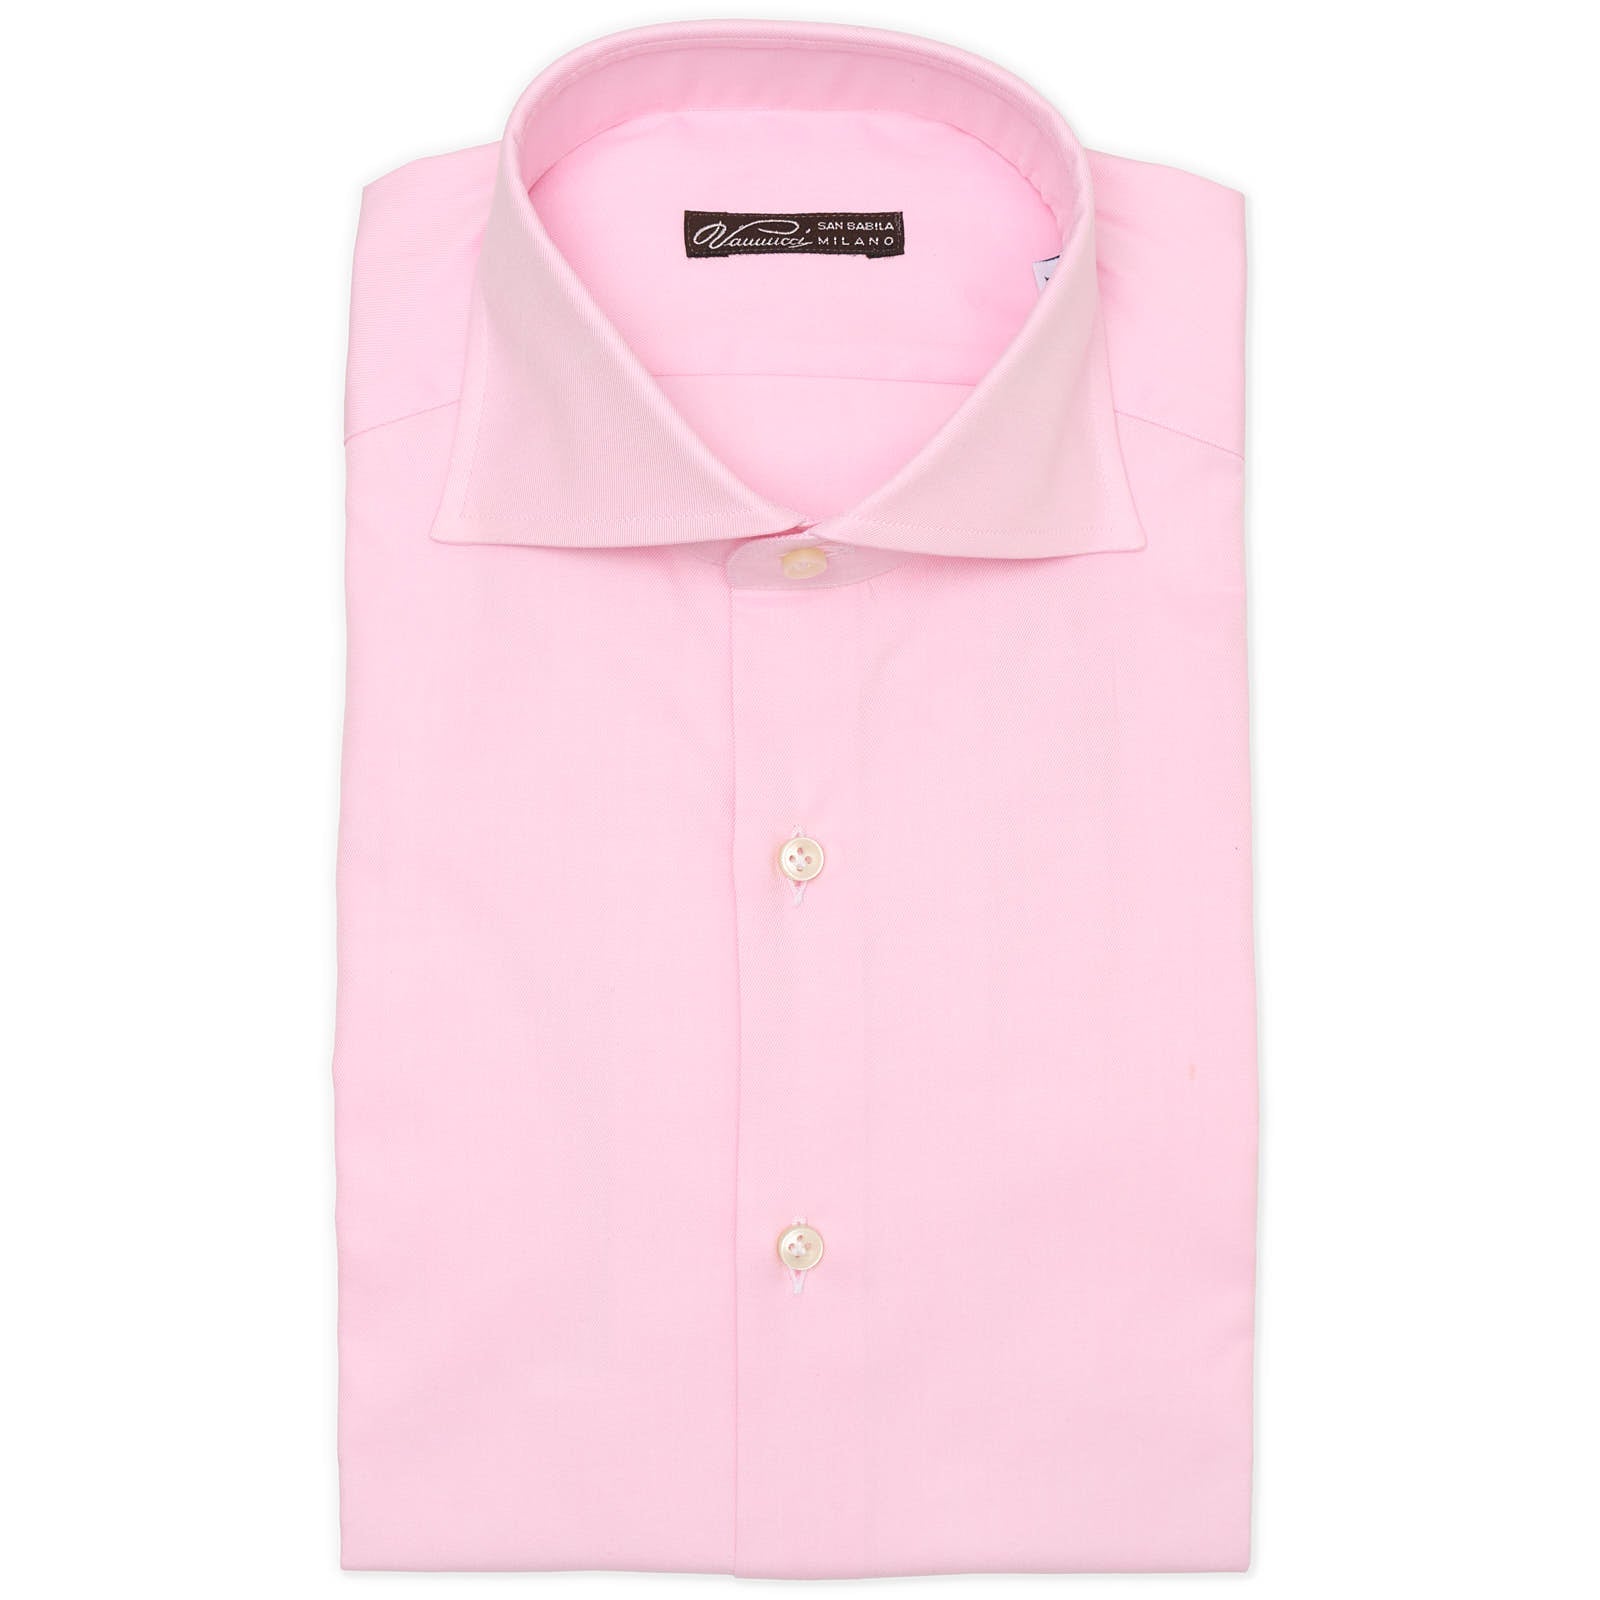 VANNUCCI Milano Pink Cotton Dress Shirt EU 38 NEW US 15